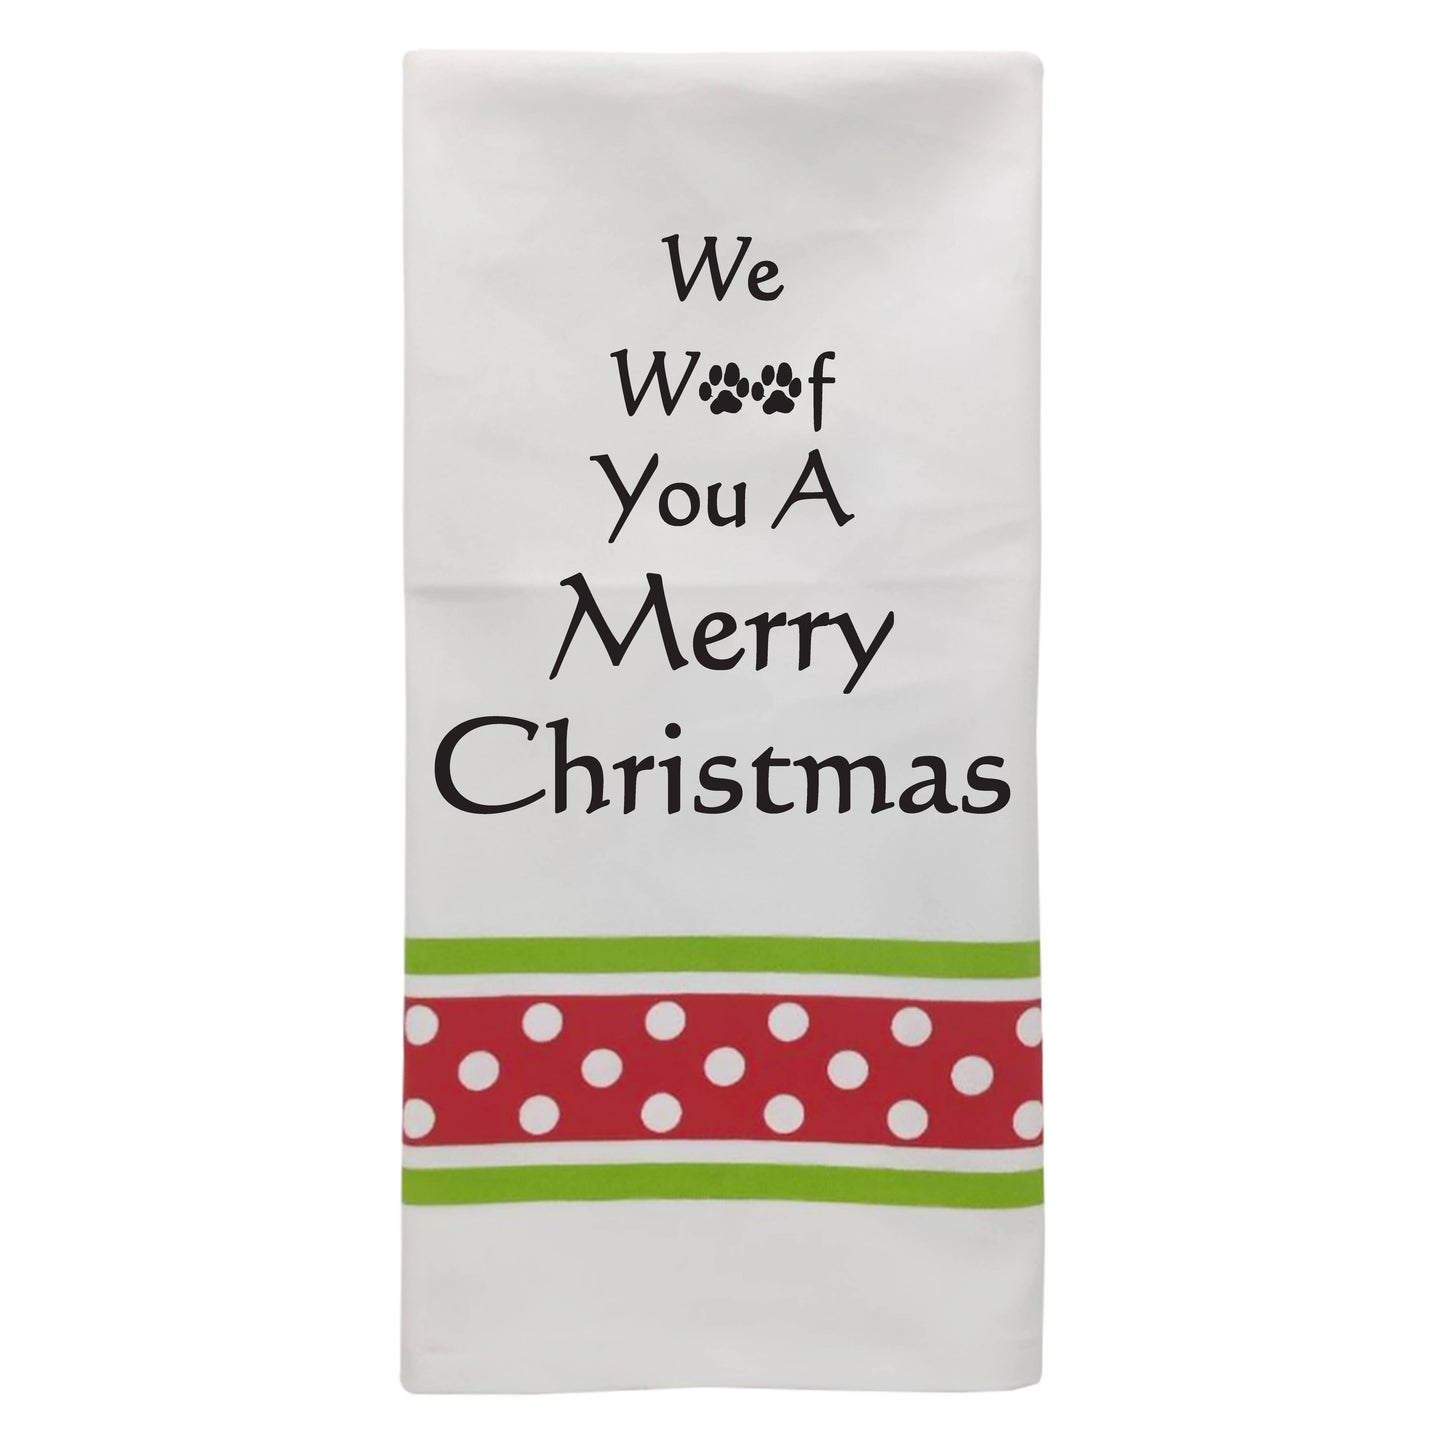 We Woof You A Merry Christmas Tea Towel